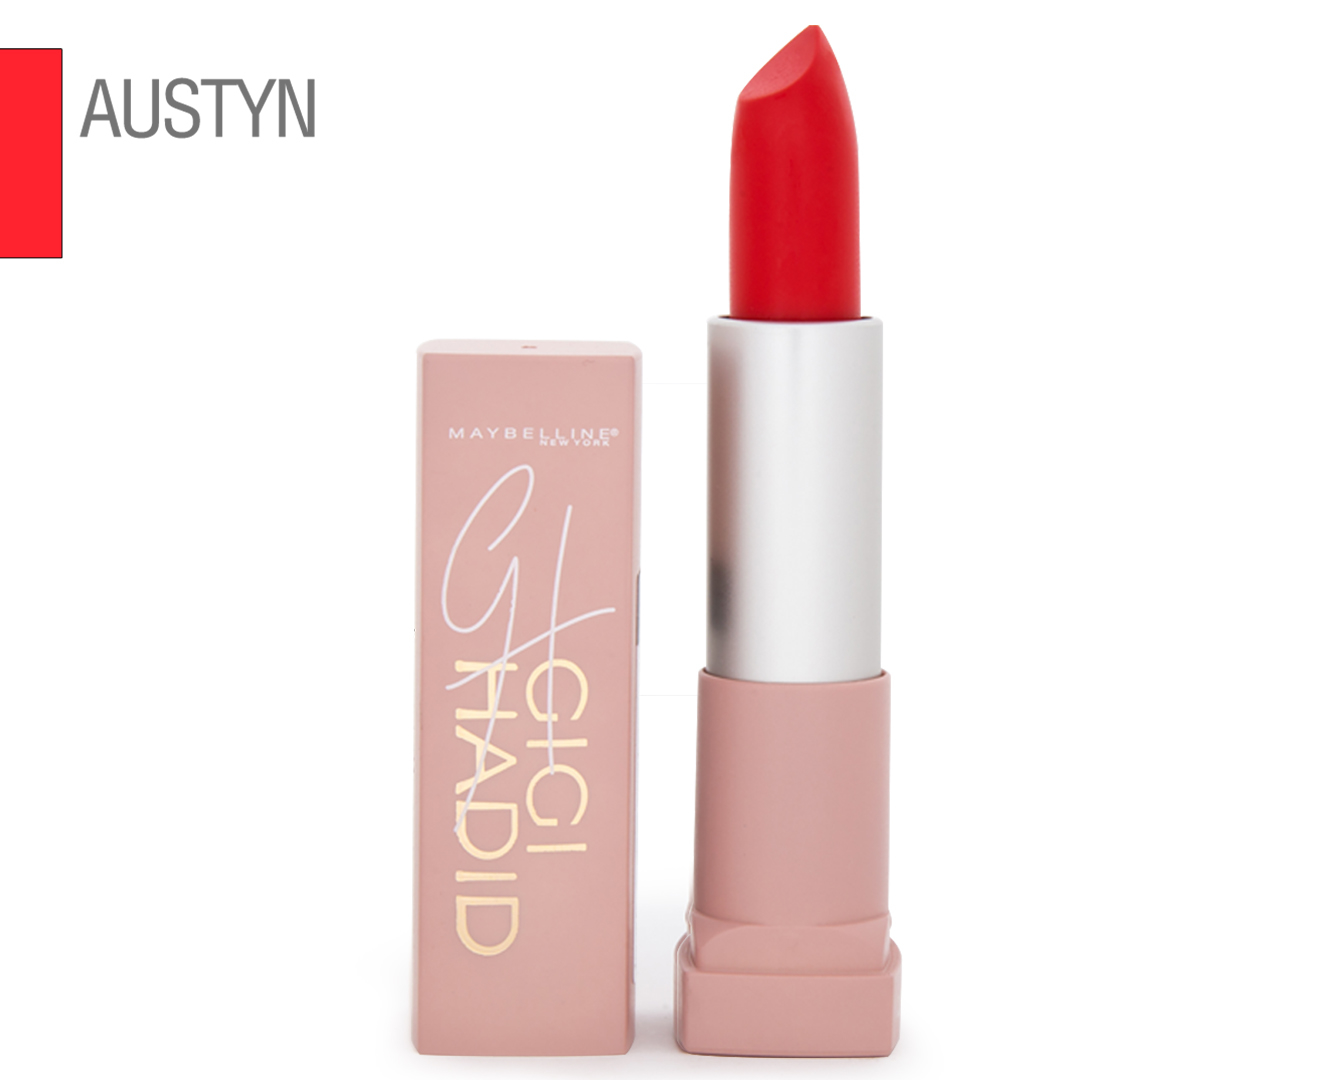 Maybelline X Gigi Hadid Matte Lipstick 42g Gg22 Austyn Nz 